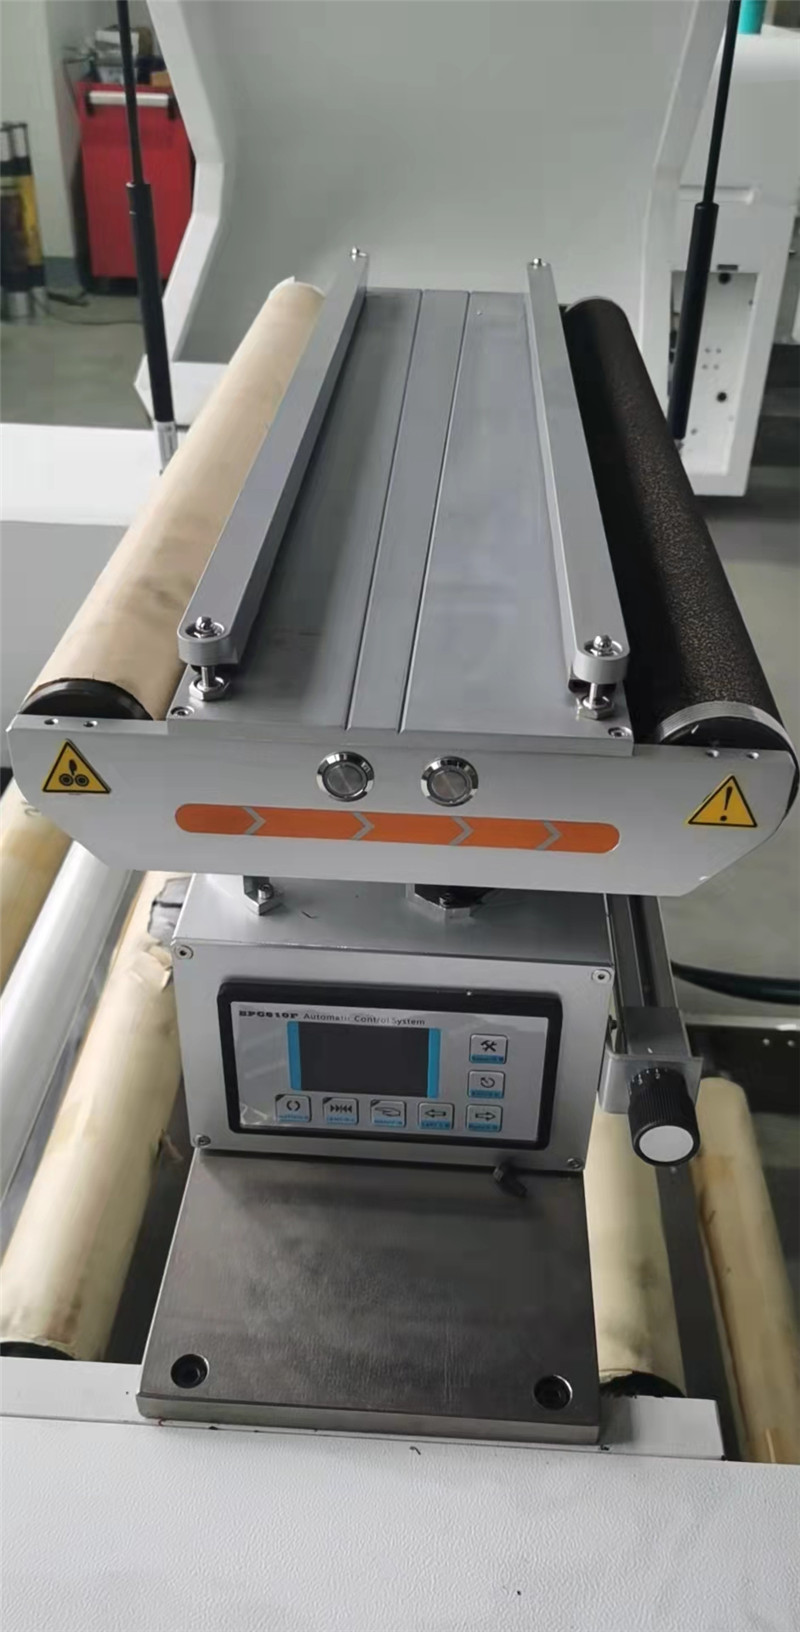 HSR-1000 4 Colors Unit type flexo printing machine (6)